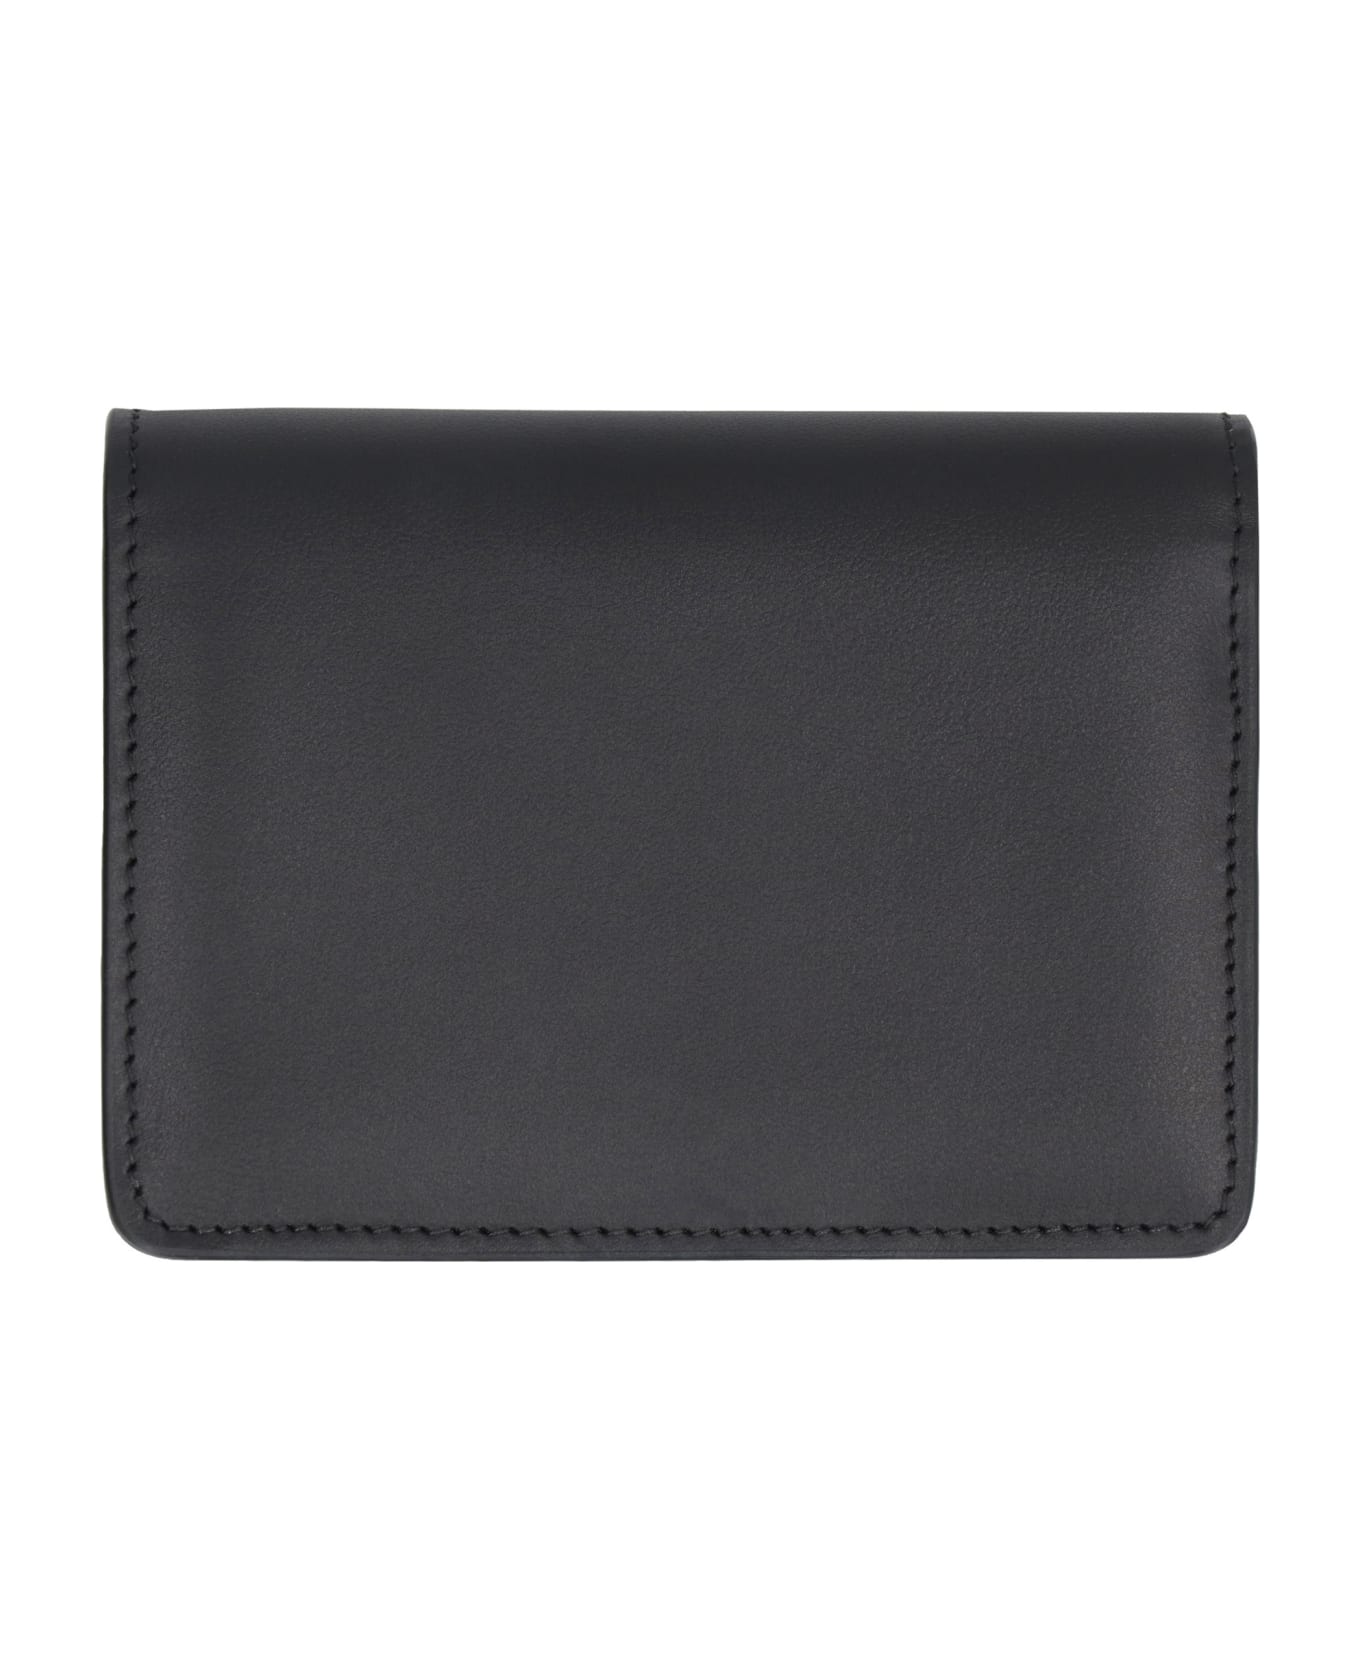 Dolce & Gabbana Leather Wallet - black